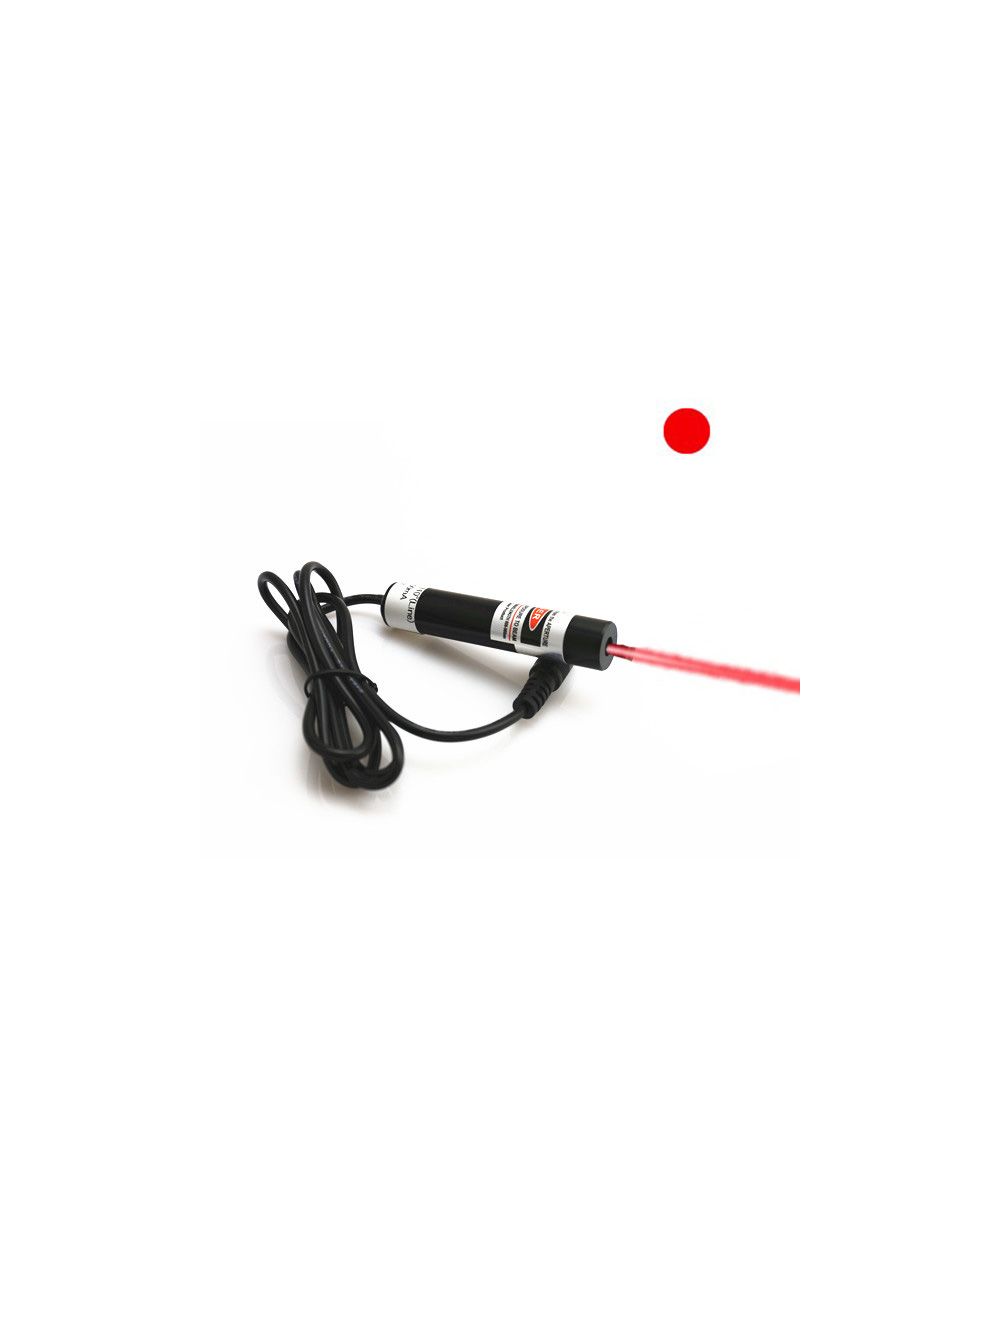 635nm Red Dot Laser Module, Adjustable Focus Red Laser Modules